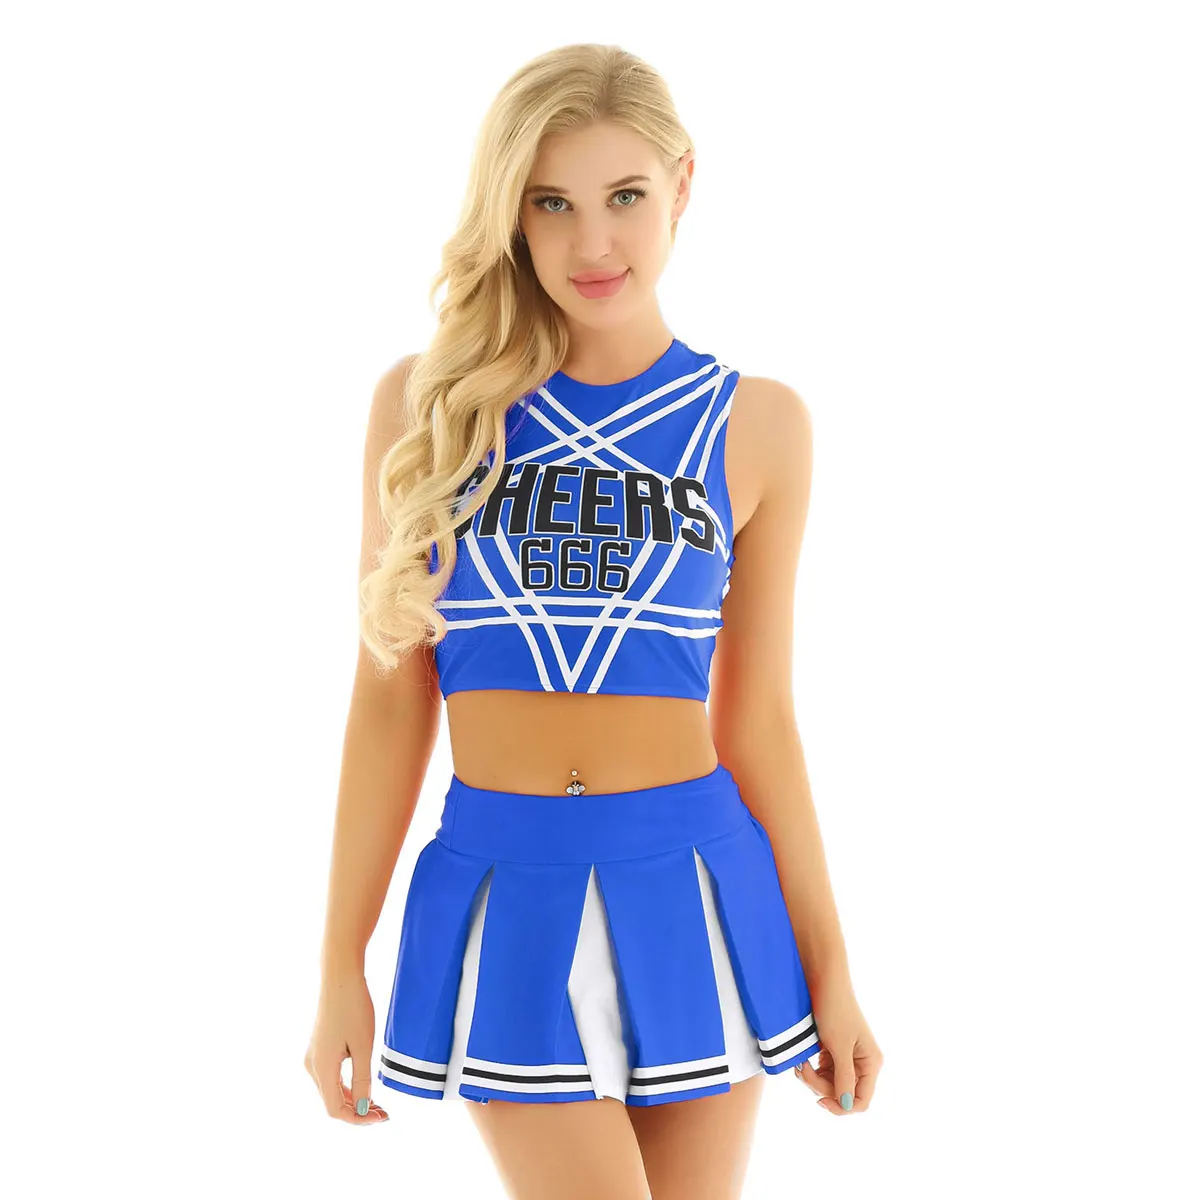 NEW Adult S/M GOLD NAVY REAL Cheerleader Uniform Top Skirt 34-36/24-28" Cosplay 